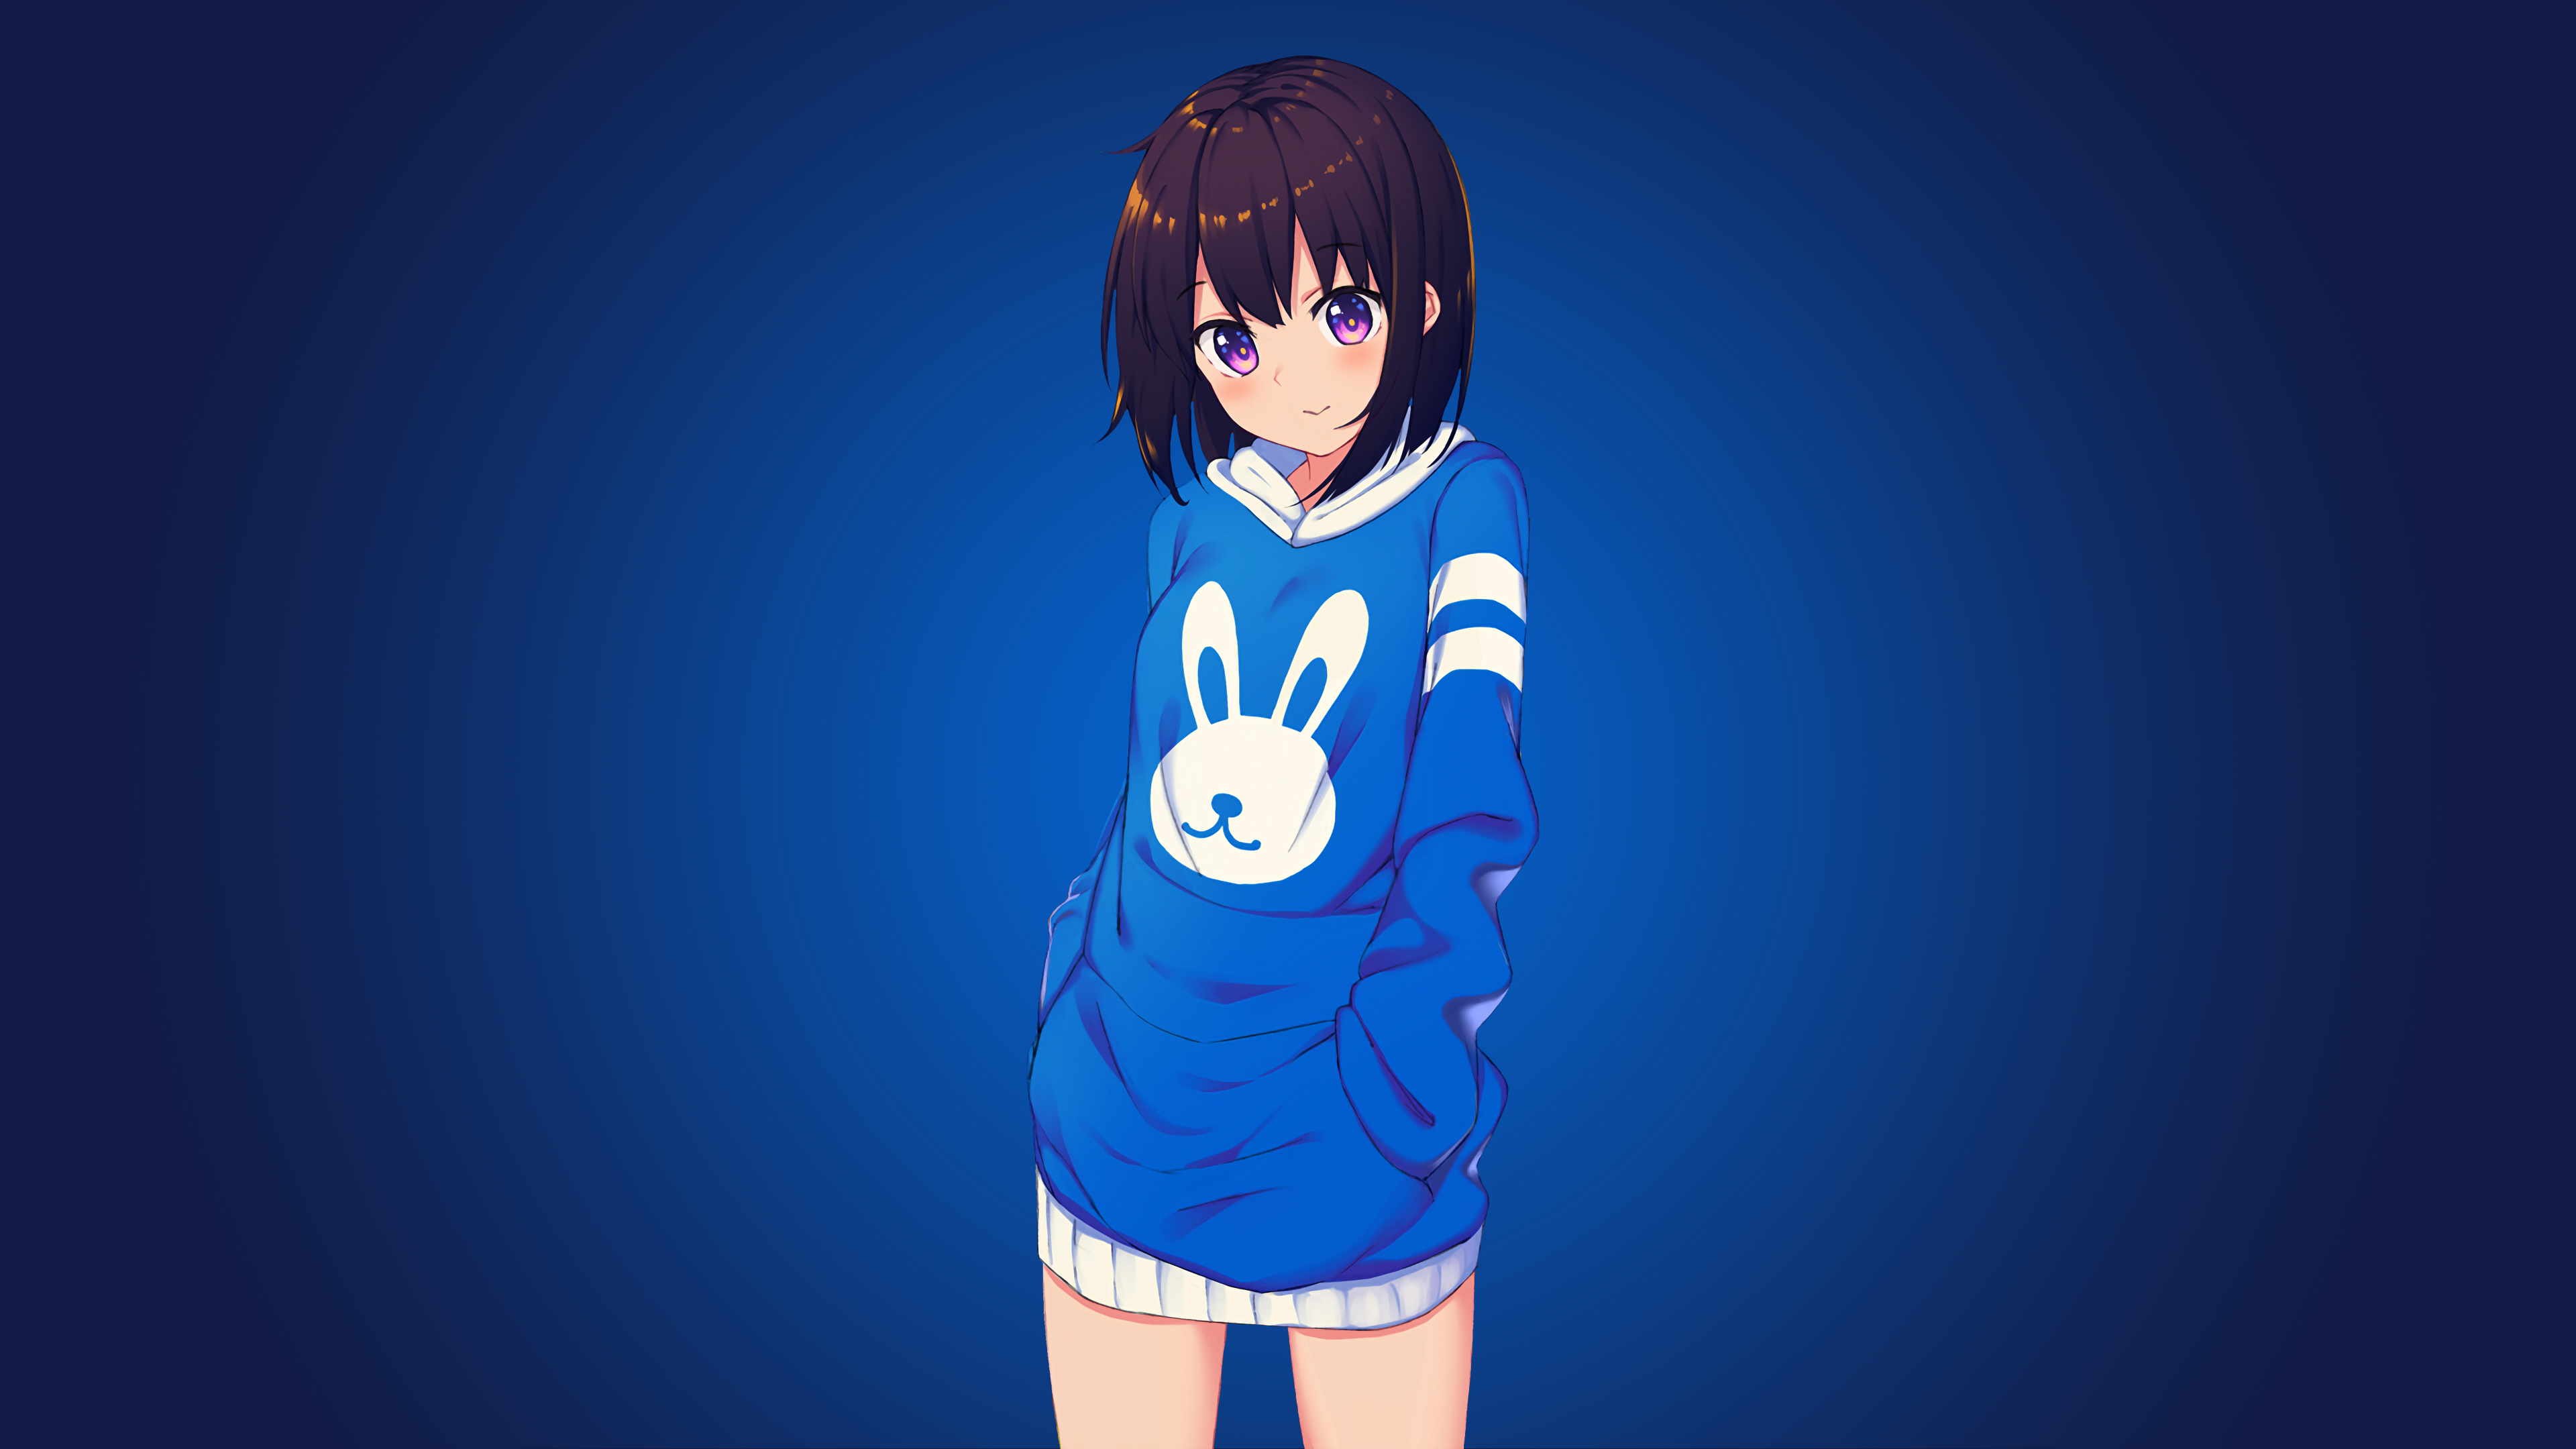 Bunny Anime Girl Wallpaper, HD Anime 4K Wallpapers, Images, Photos and